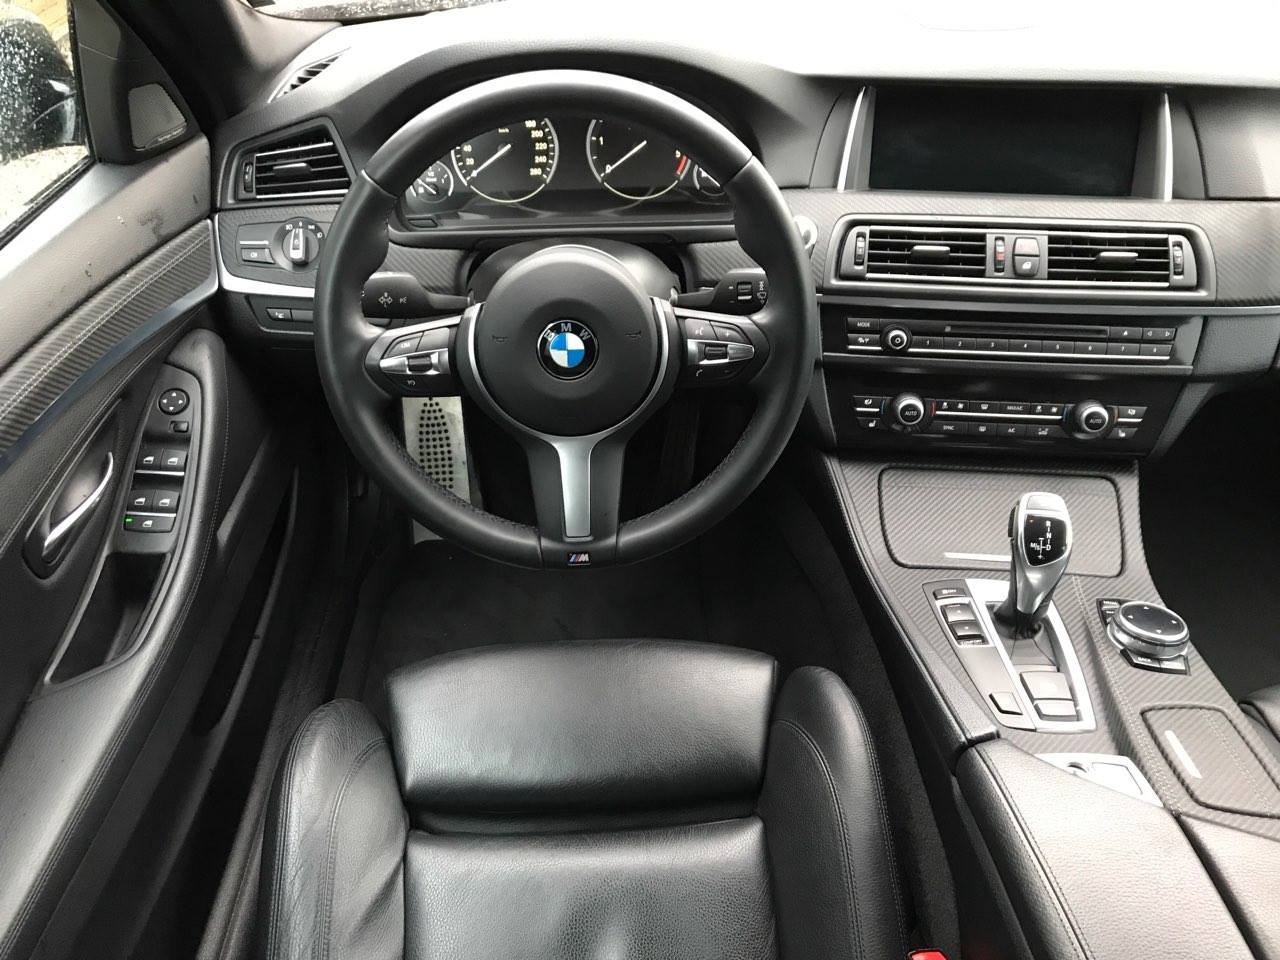 BMW F15